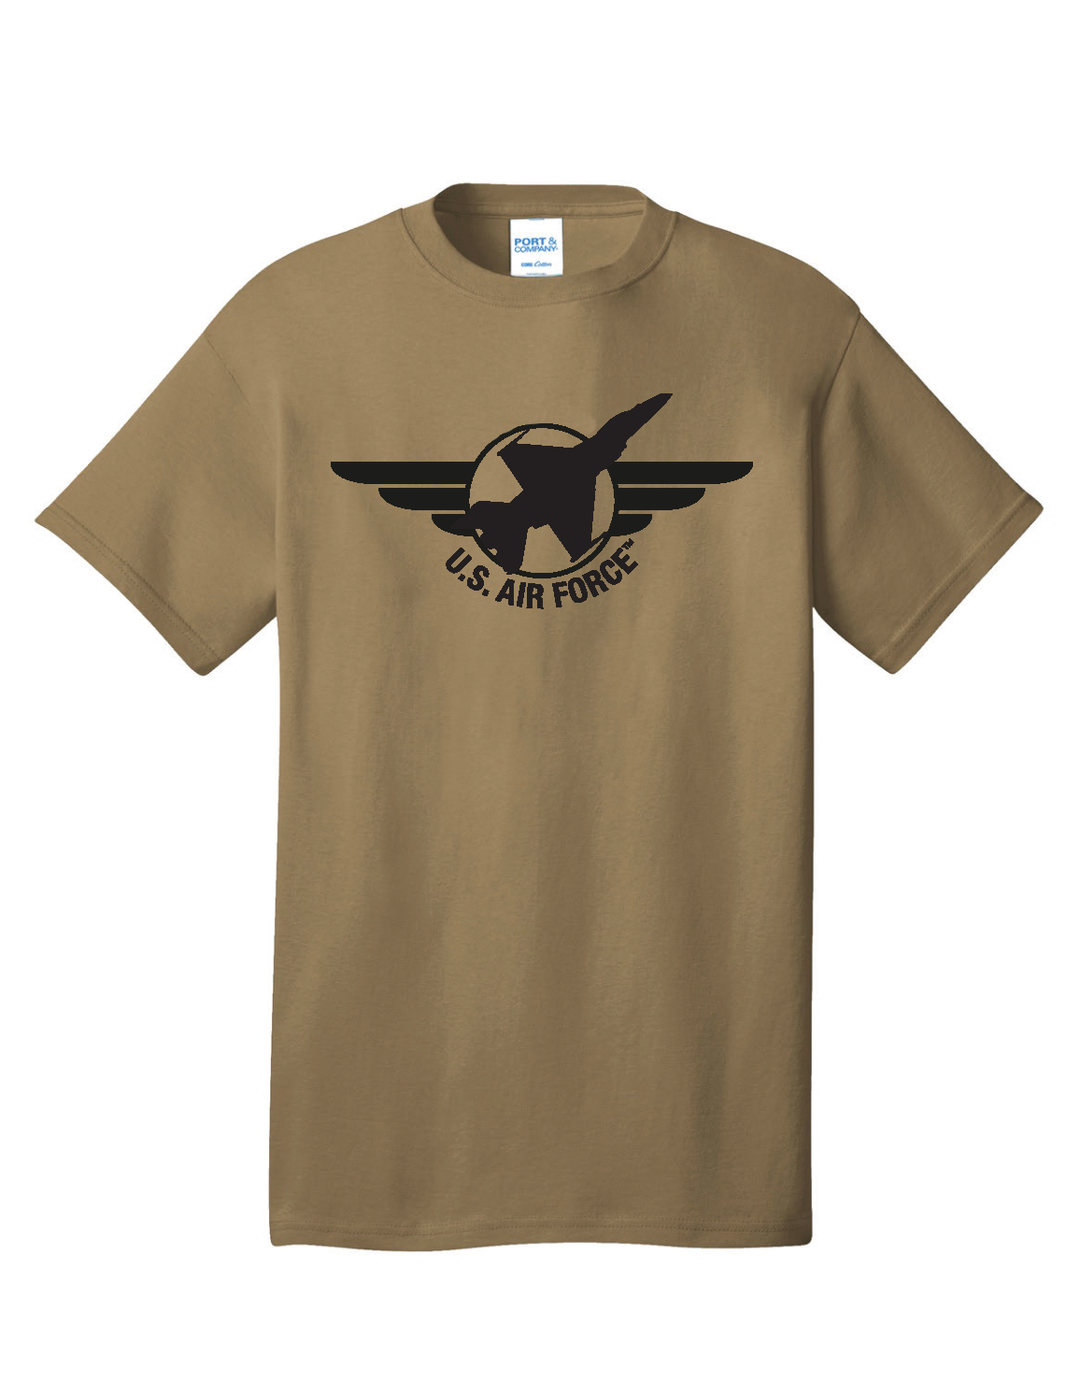 U.S. Air Force Jet T-Shirt (Coyote Brown)